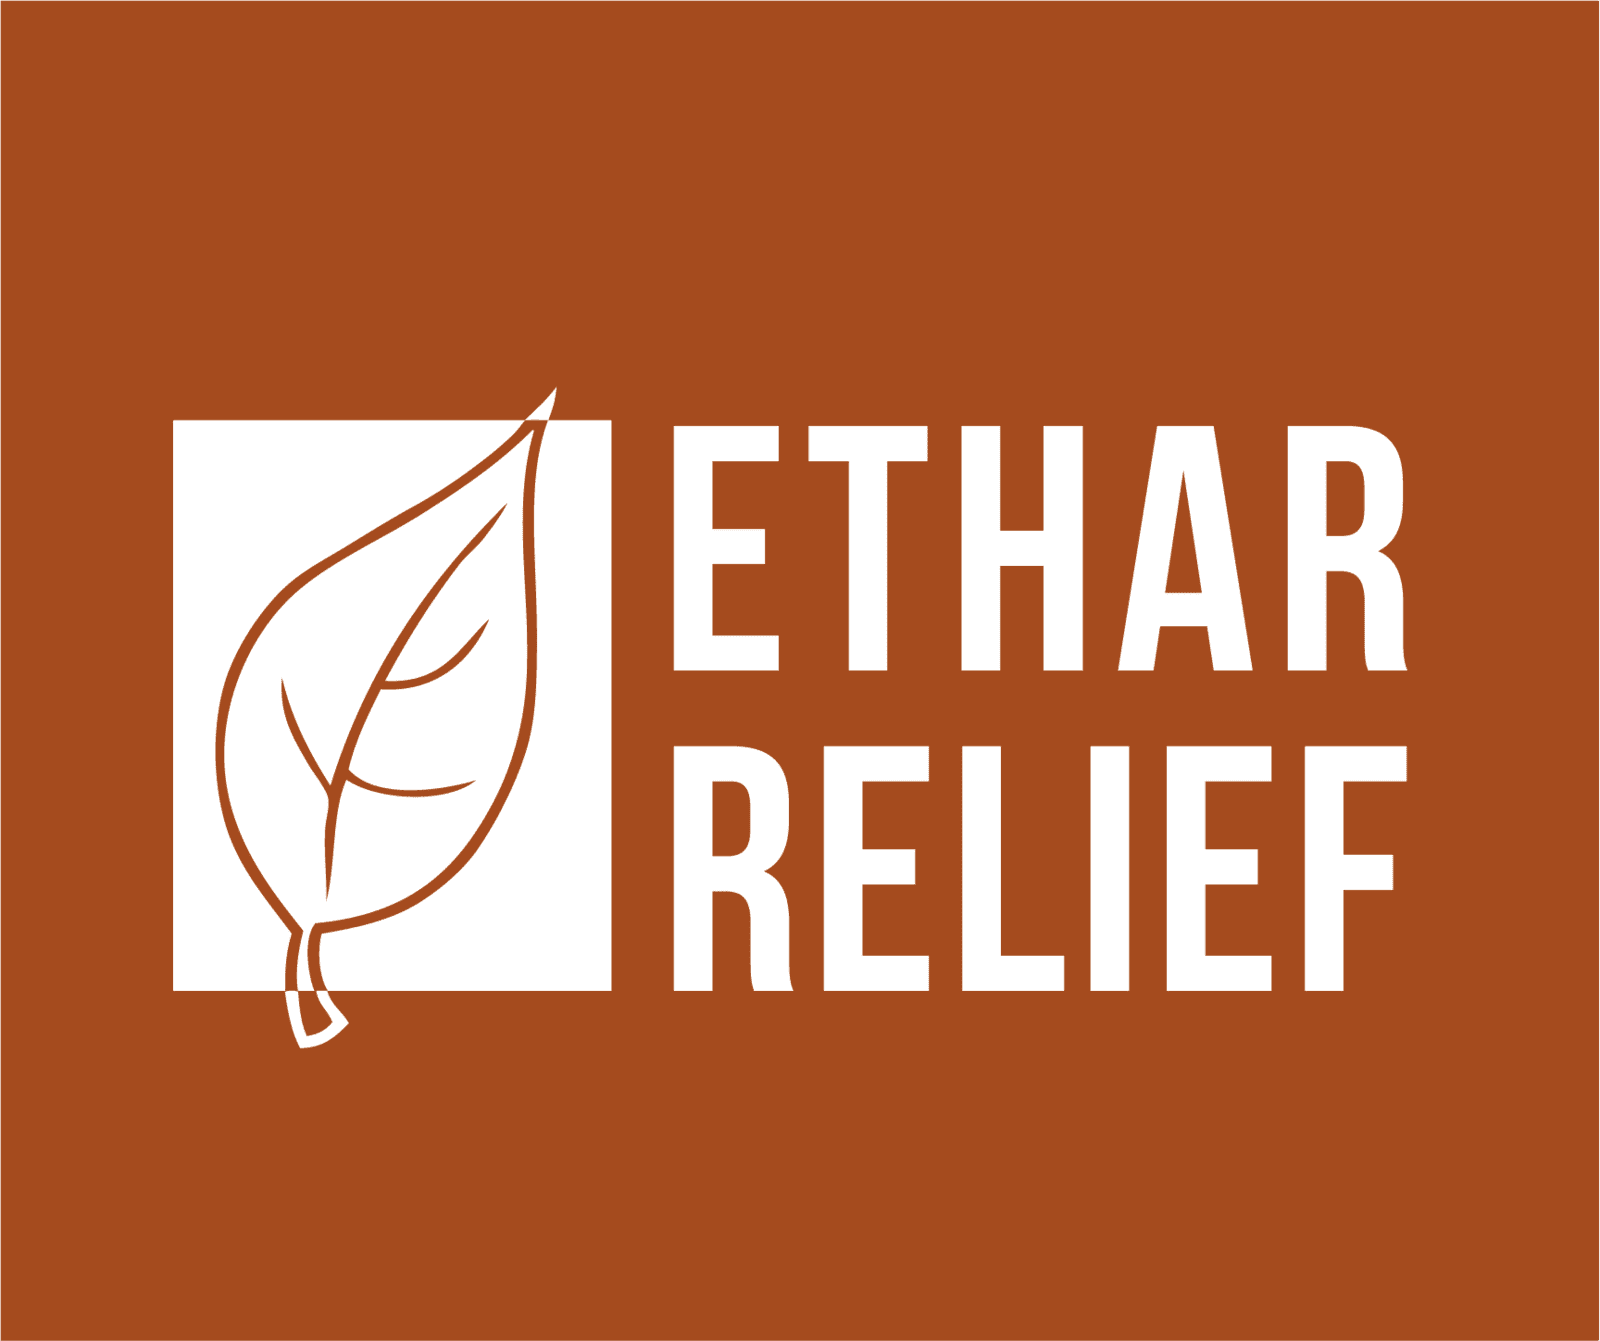 Ethar Relief